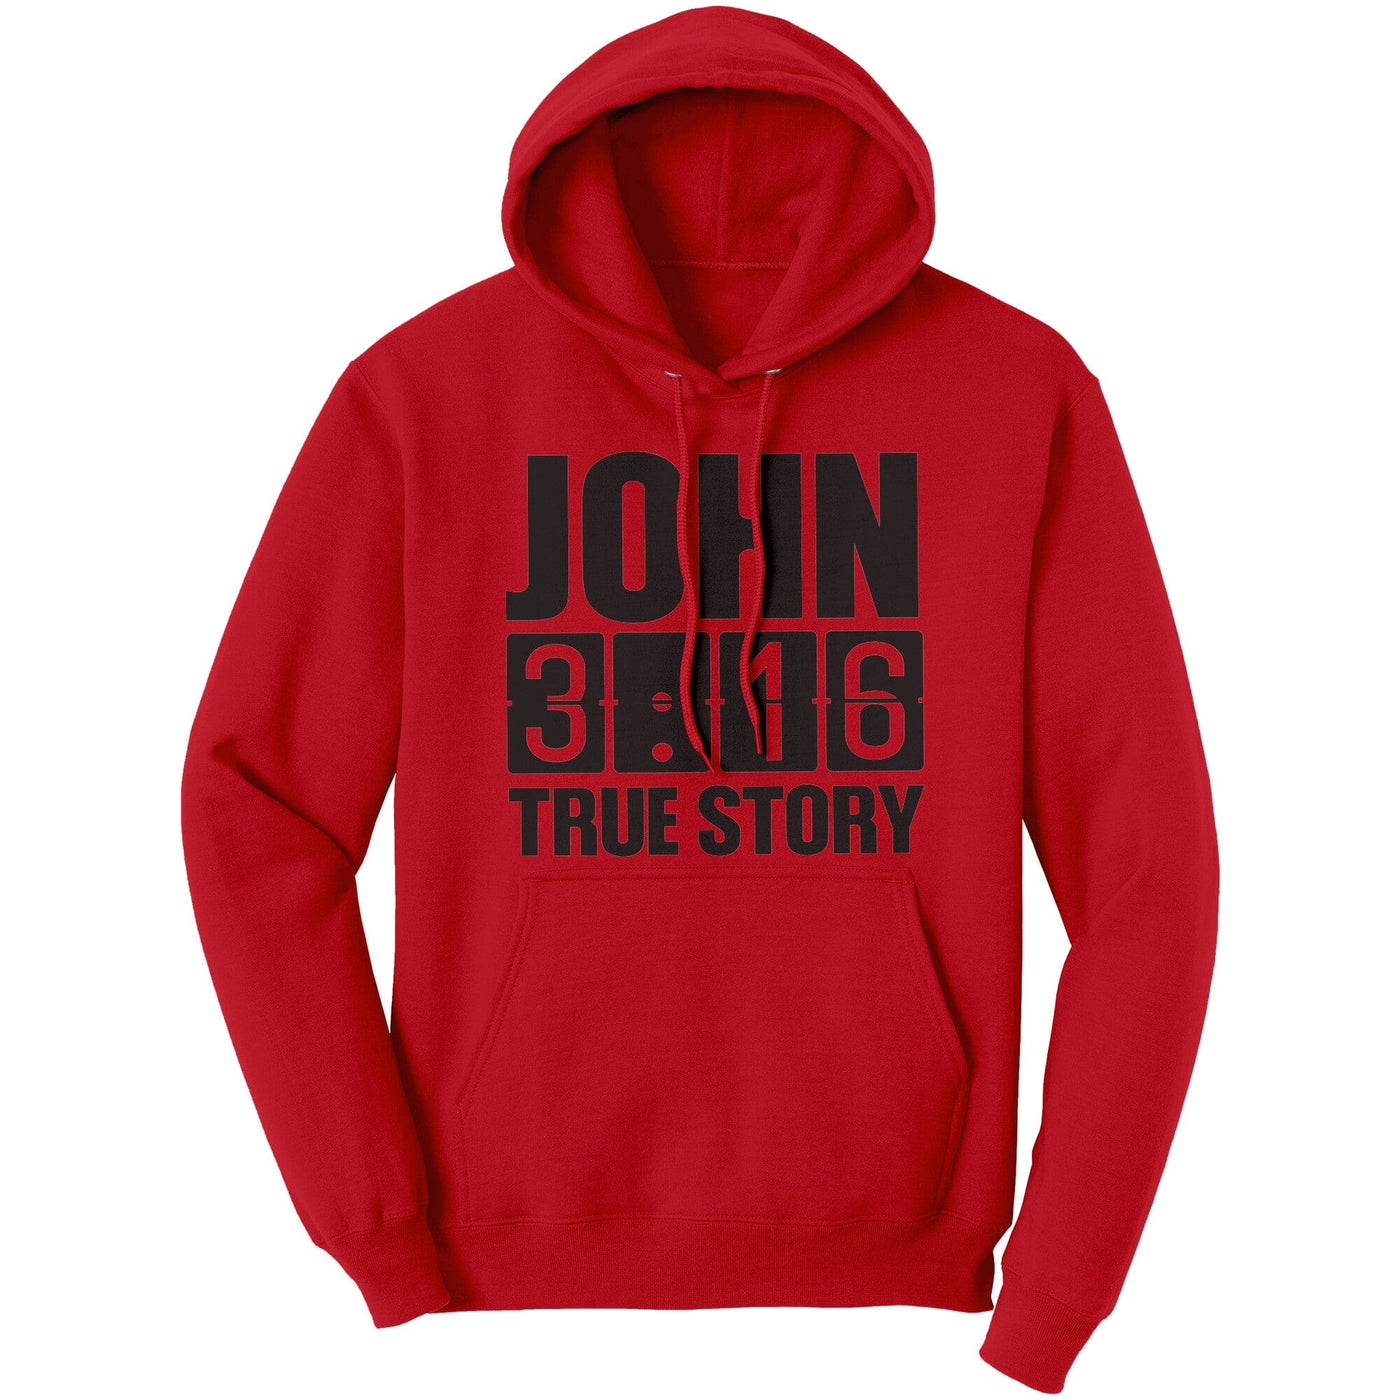 Graphic Hoodie Sweatshirt John 3:16 True Story Hooded Shirt - Unisex | Hoodies